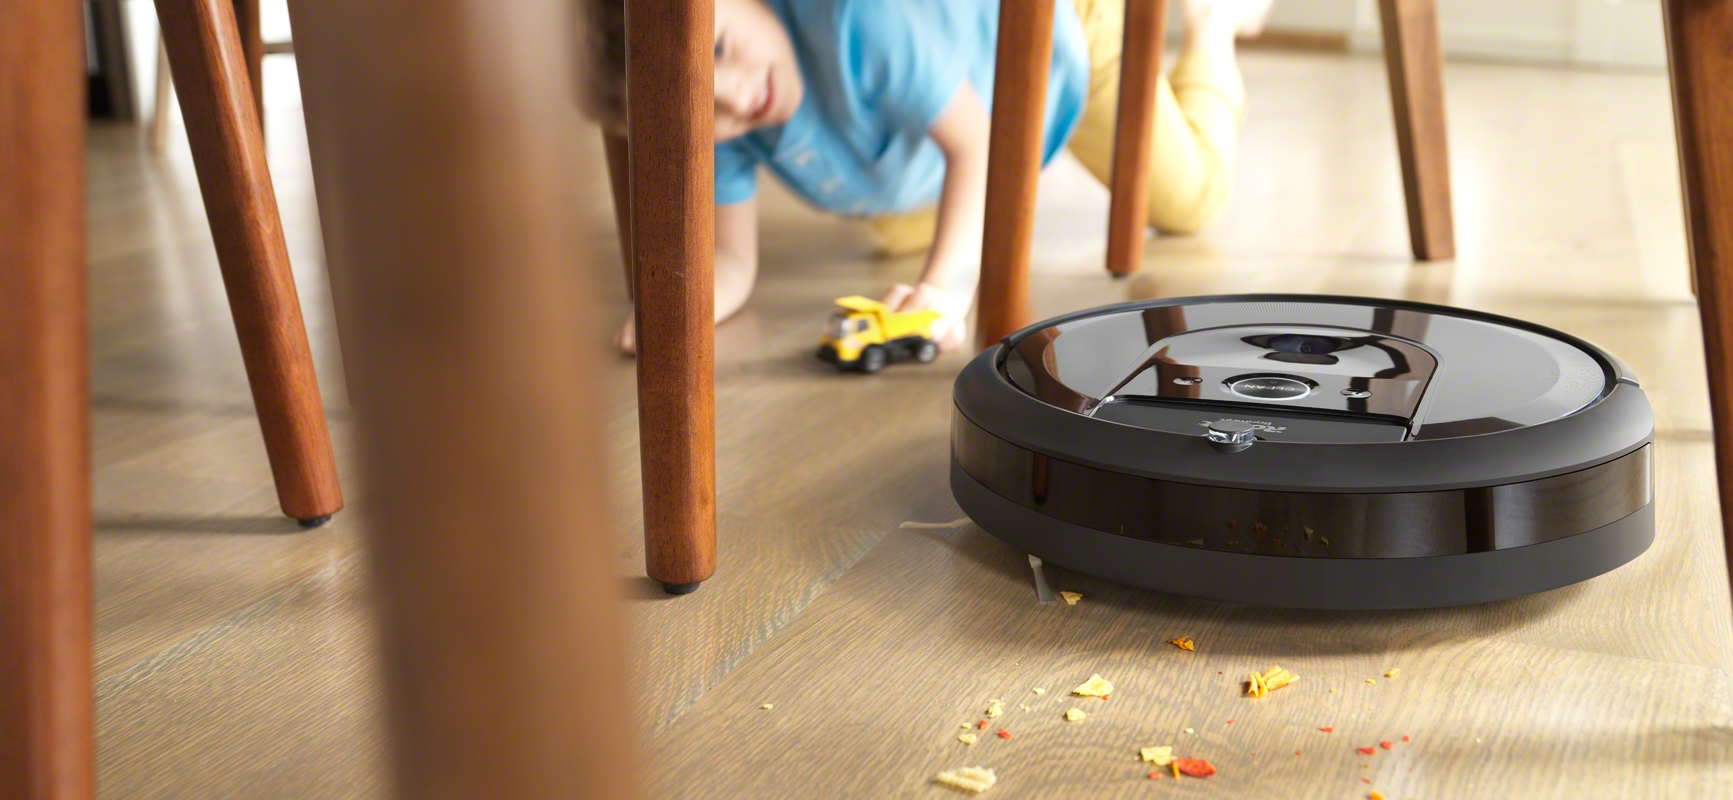 iRobot Roomba i7 odkurza pod krzesłem